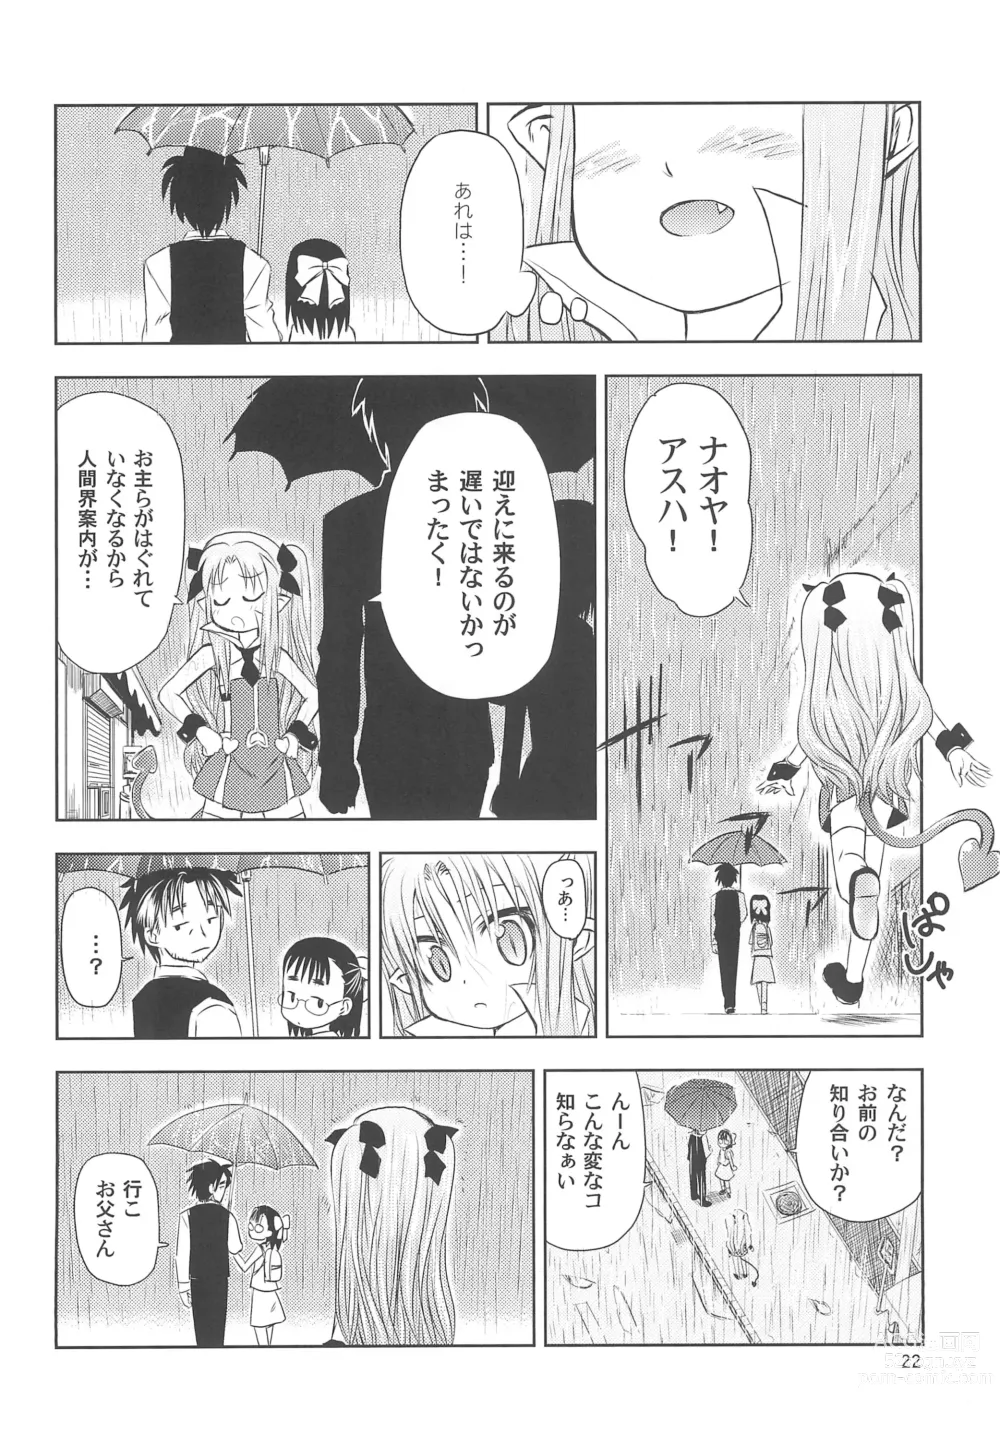 Page 22 of doujinshi Maigo no Maigo no Hime-sama Plus